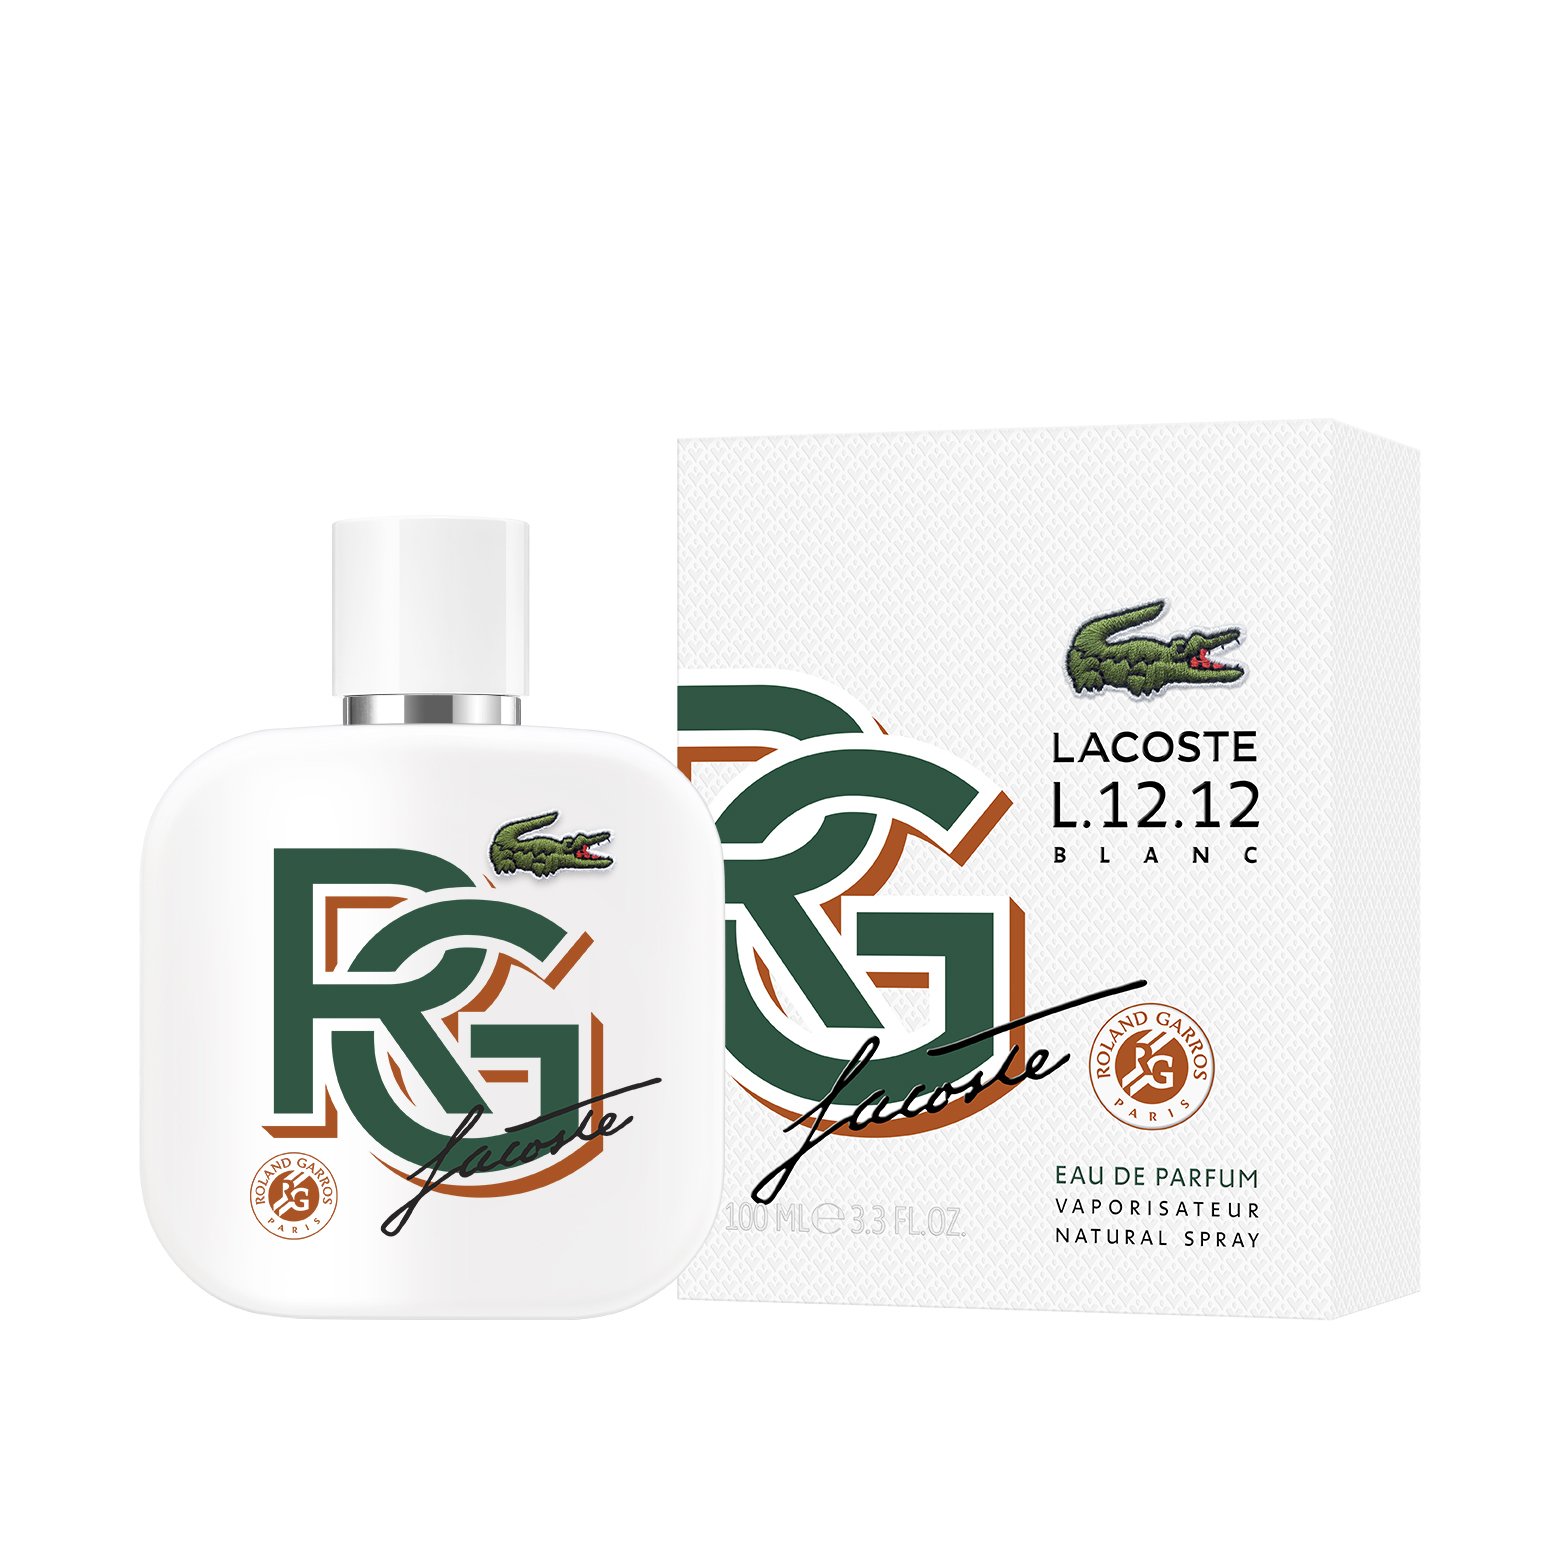 bekymring Mild At bidrage L.12.12. official Roland-Garros fragrance - 100 ml | Roland-Garros Store